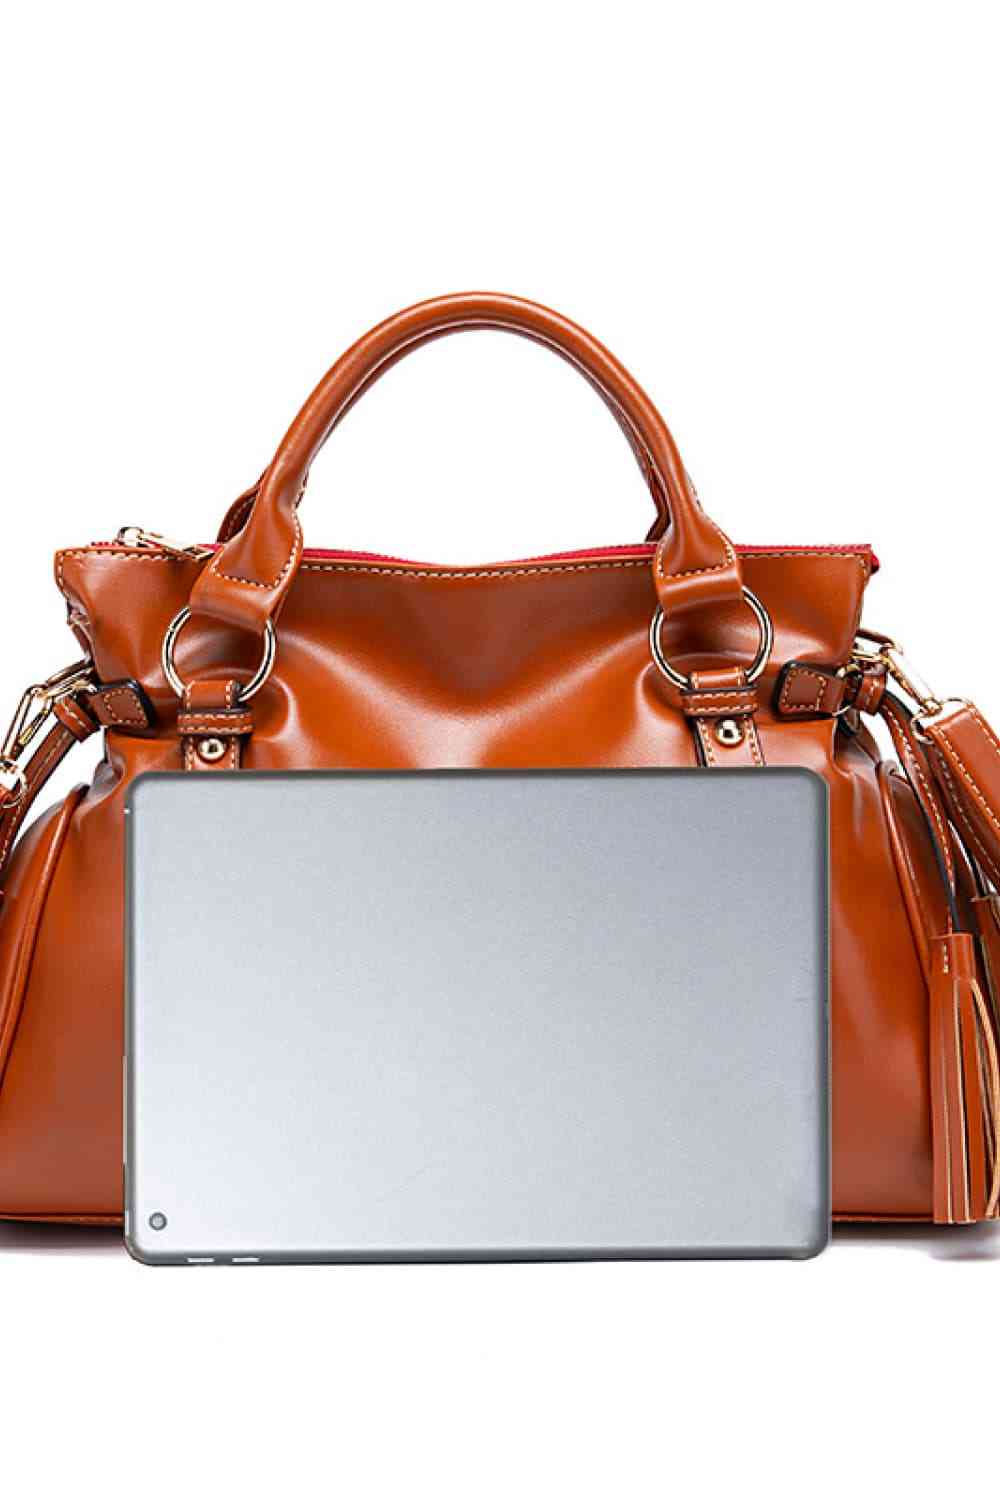 PU Leather Handbag with Tassels - BloomBliss.com